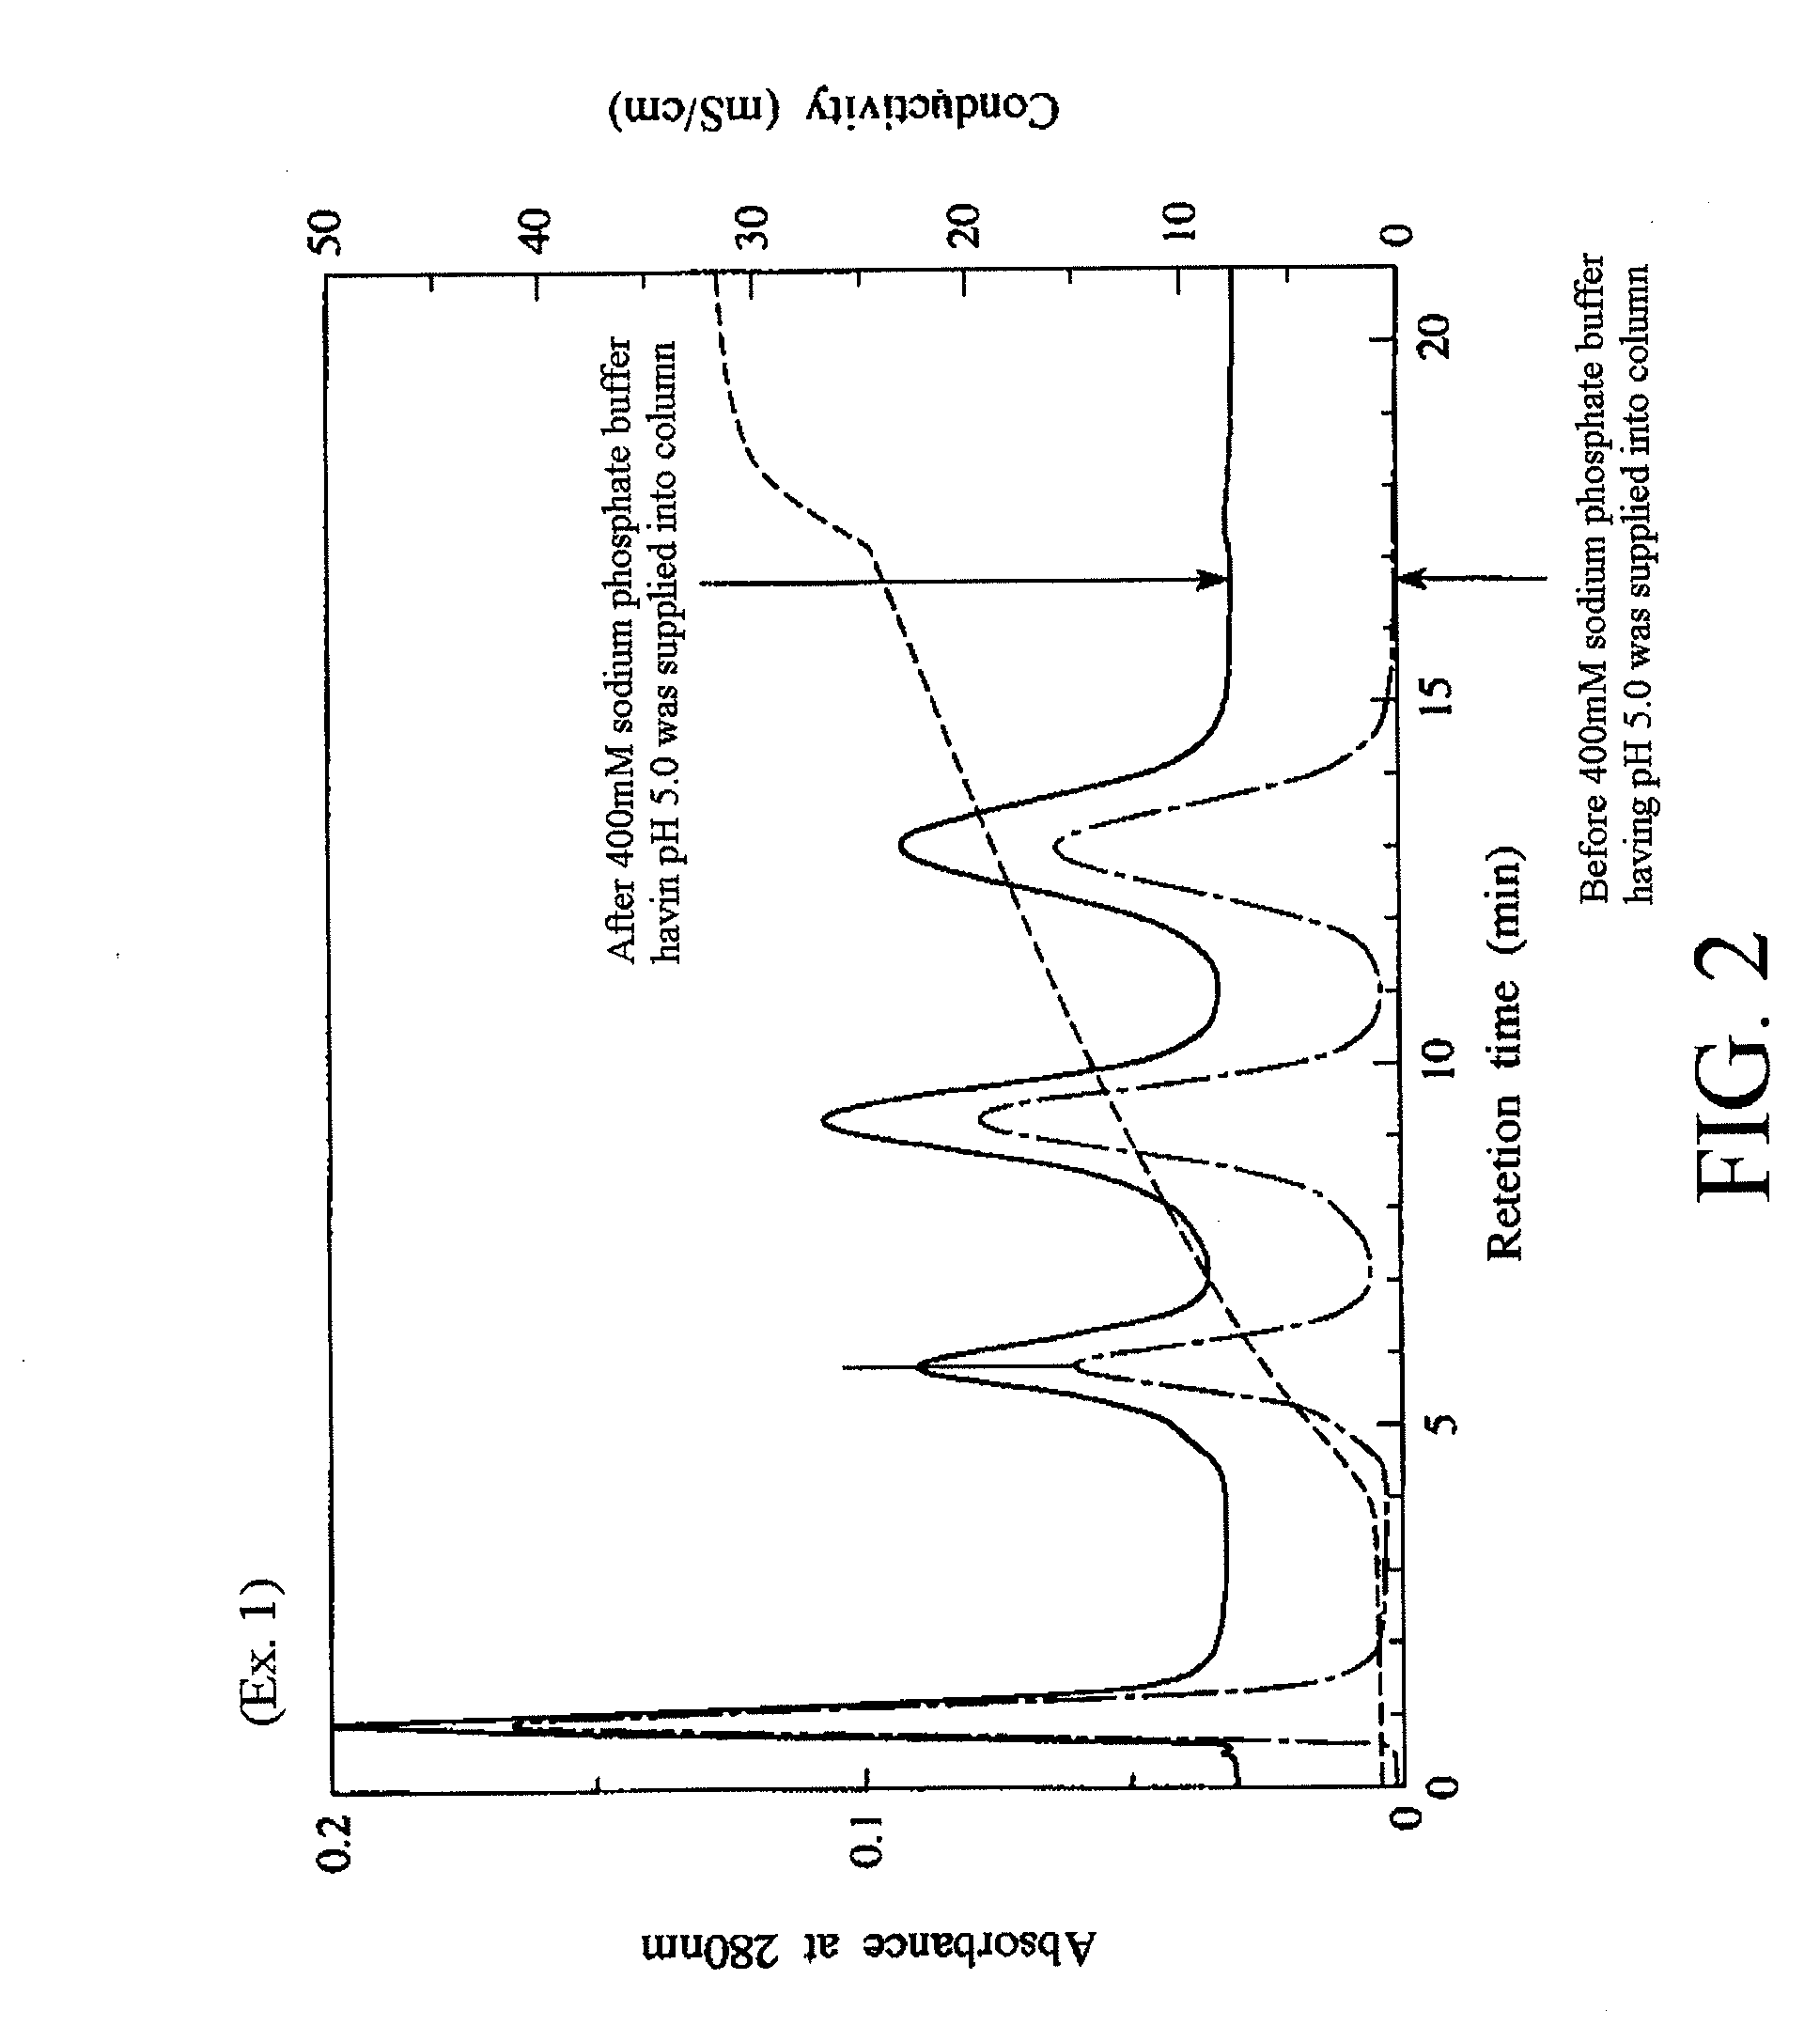 Method of producing fluoroapatite, fluoroapatite, and adsorption apparatus